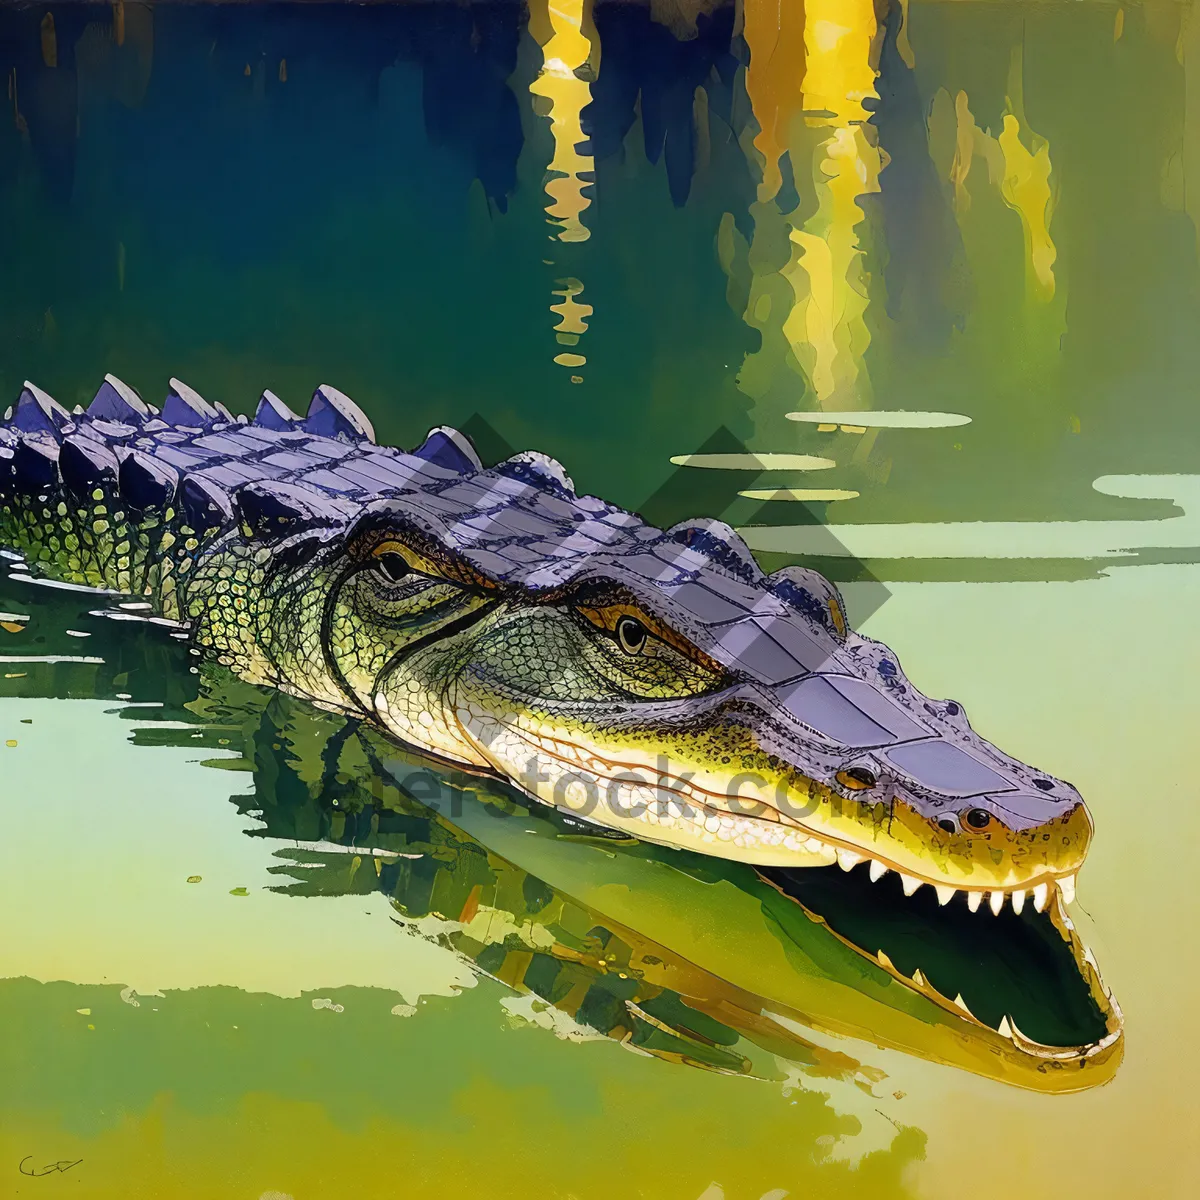 Wild Reptile in Water: Alligator Crocodile River Lake Wildlife